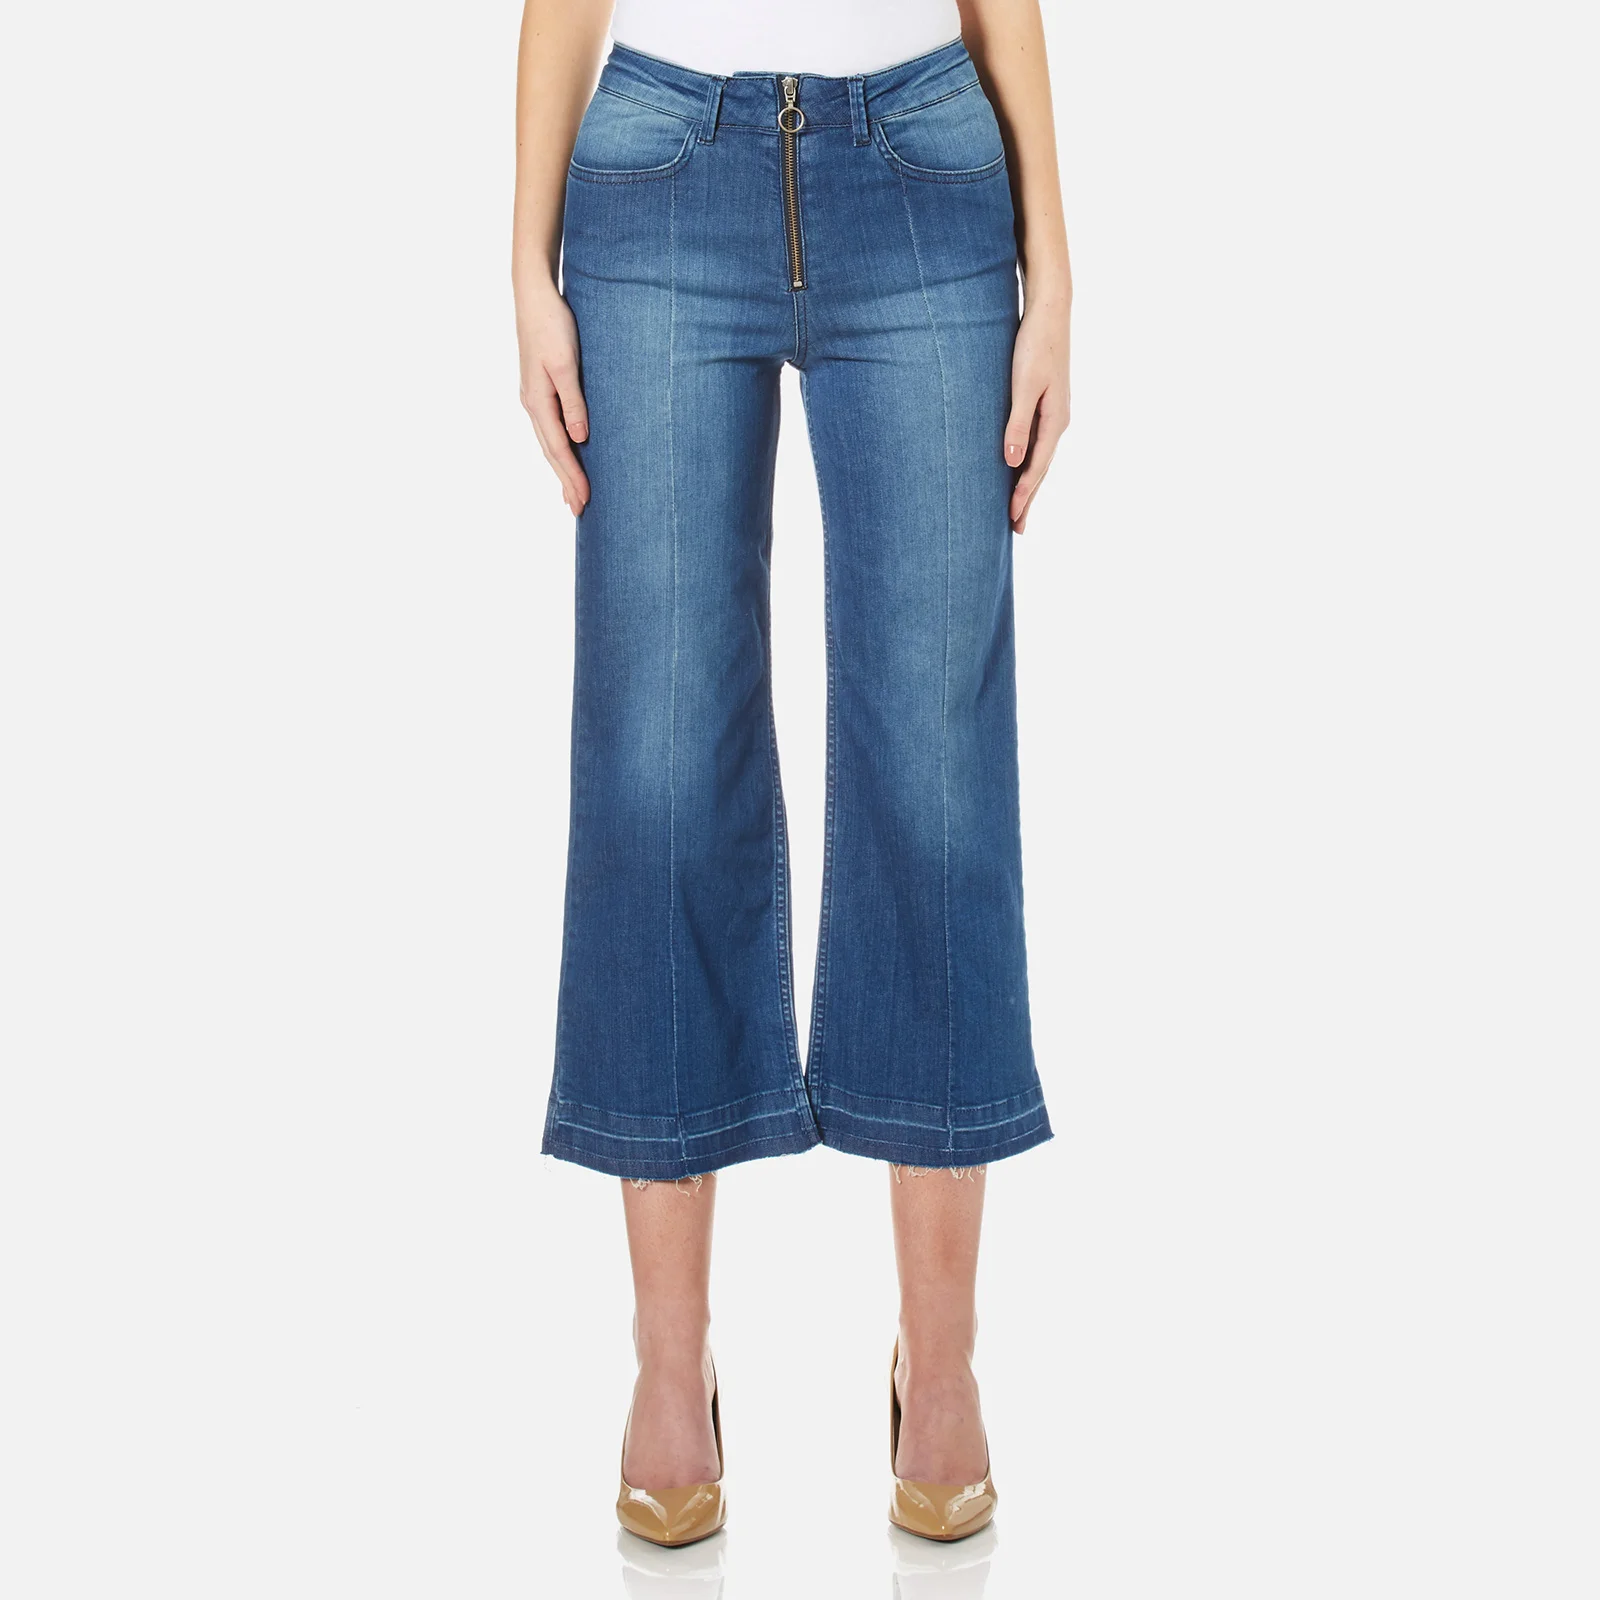 By Malene Birger Women's Lesatian Zip Jeans - Pastel Blue Image 1